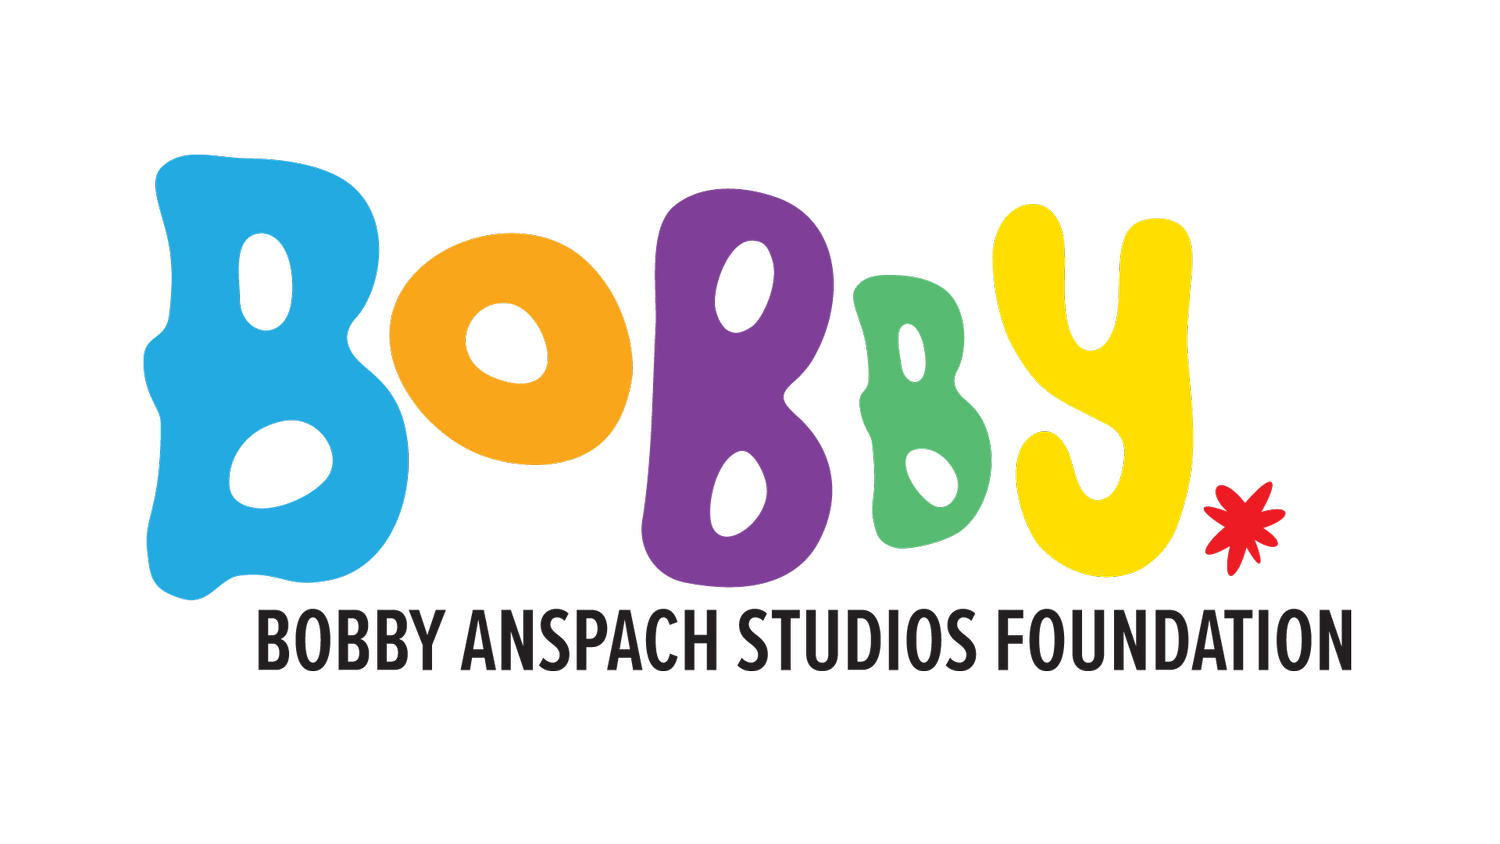 Bobby Anspach Studios Foundation